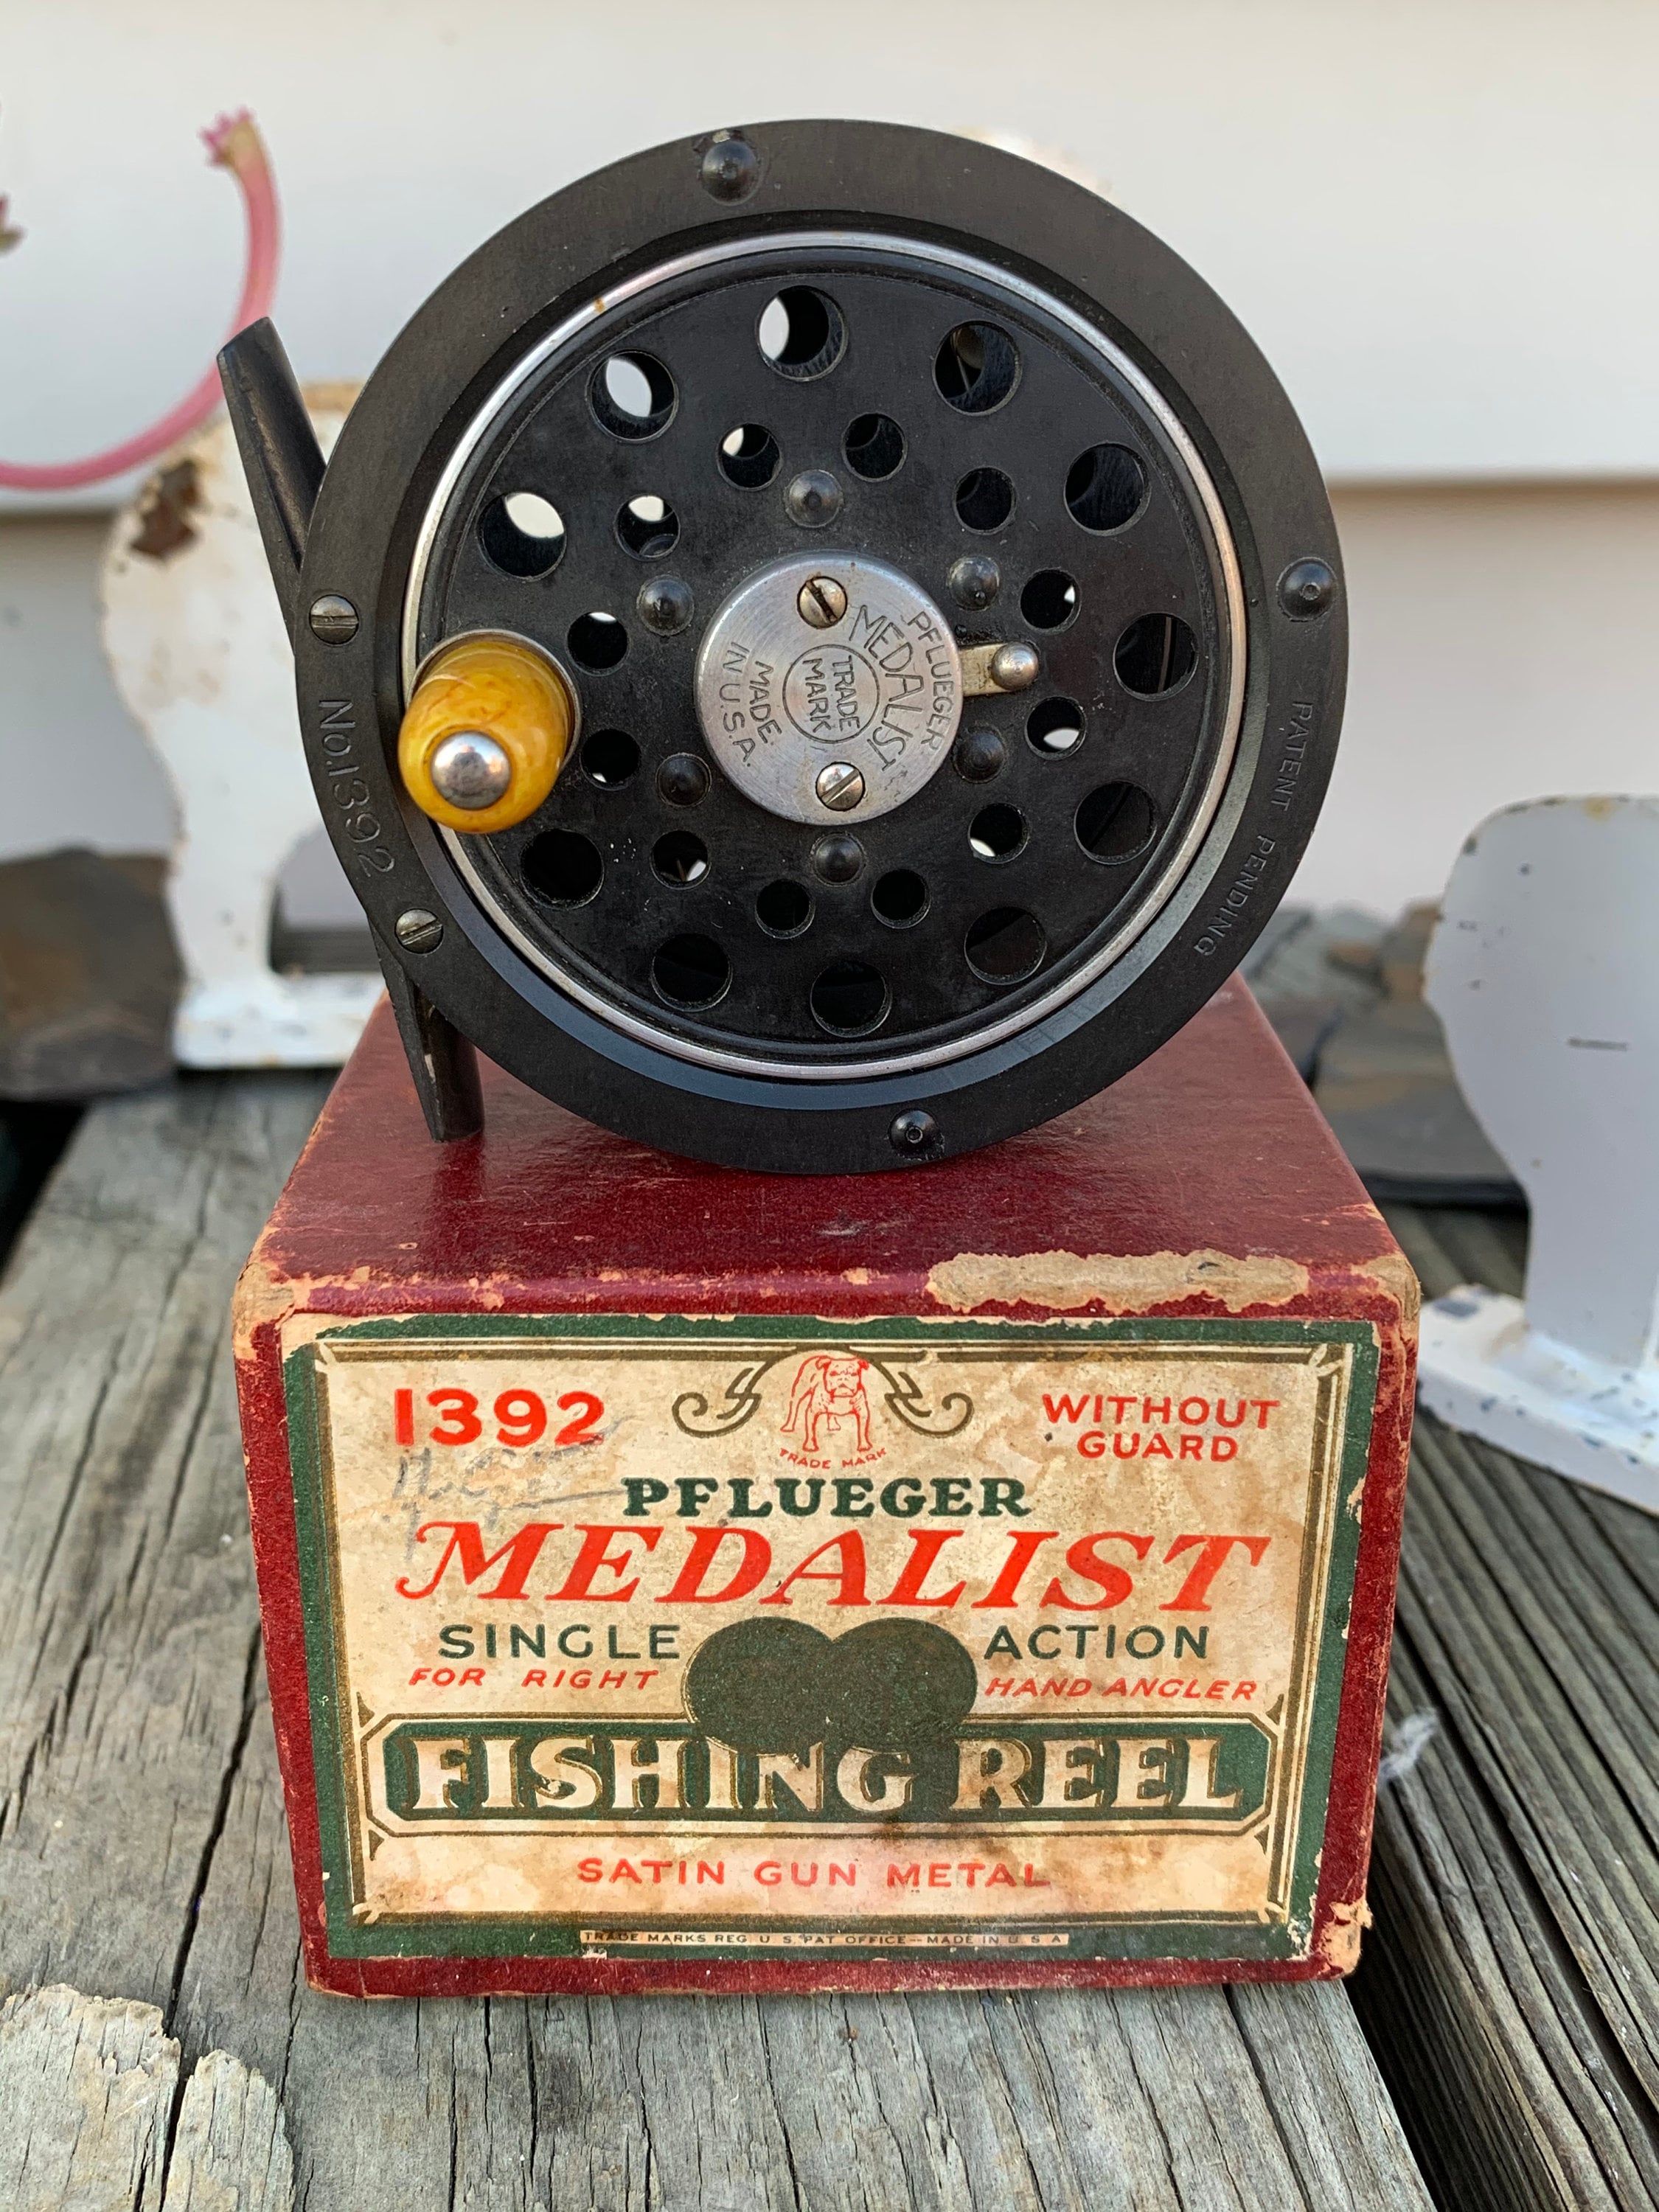 Pflueger Medalist 1392 Fly Fishing Reel in 1930 Box W/ Paper